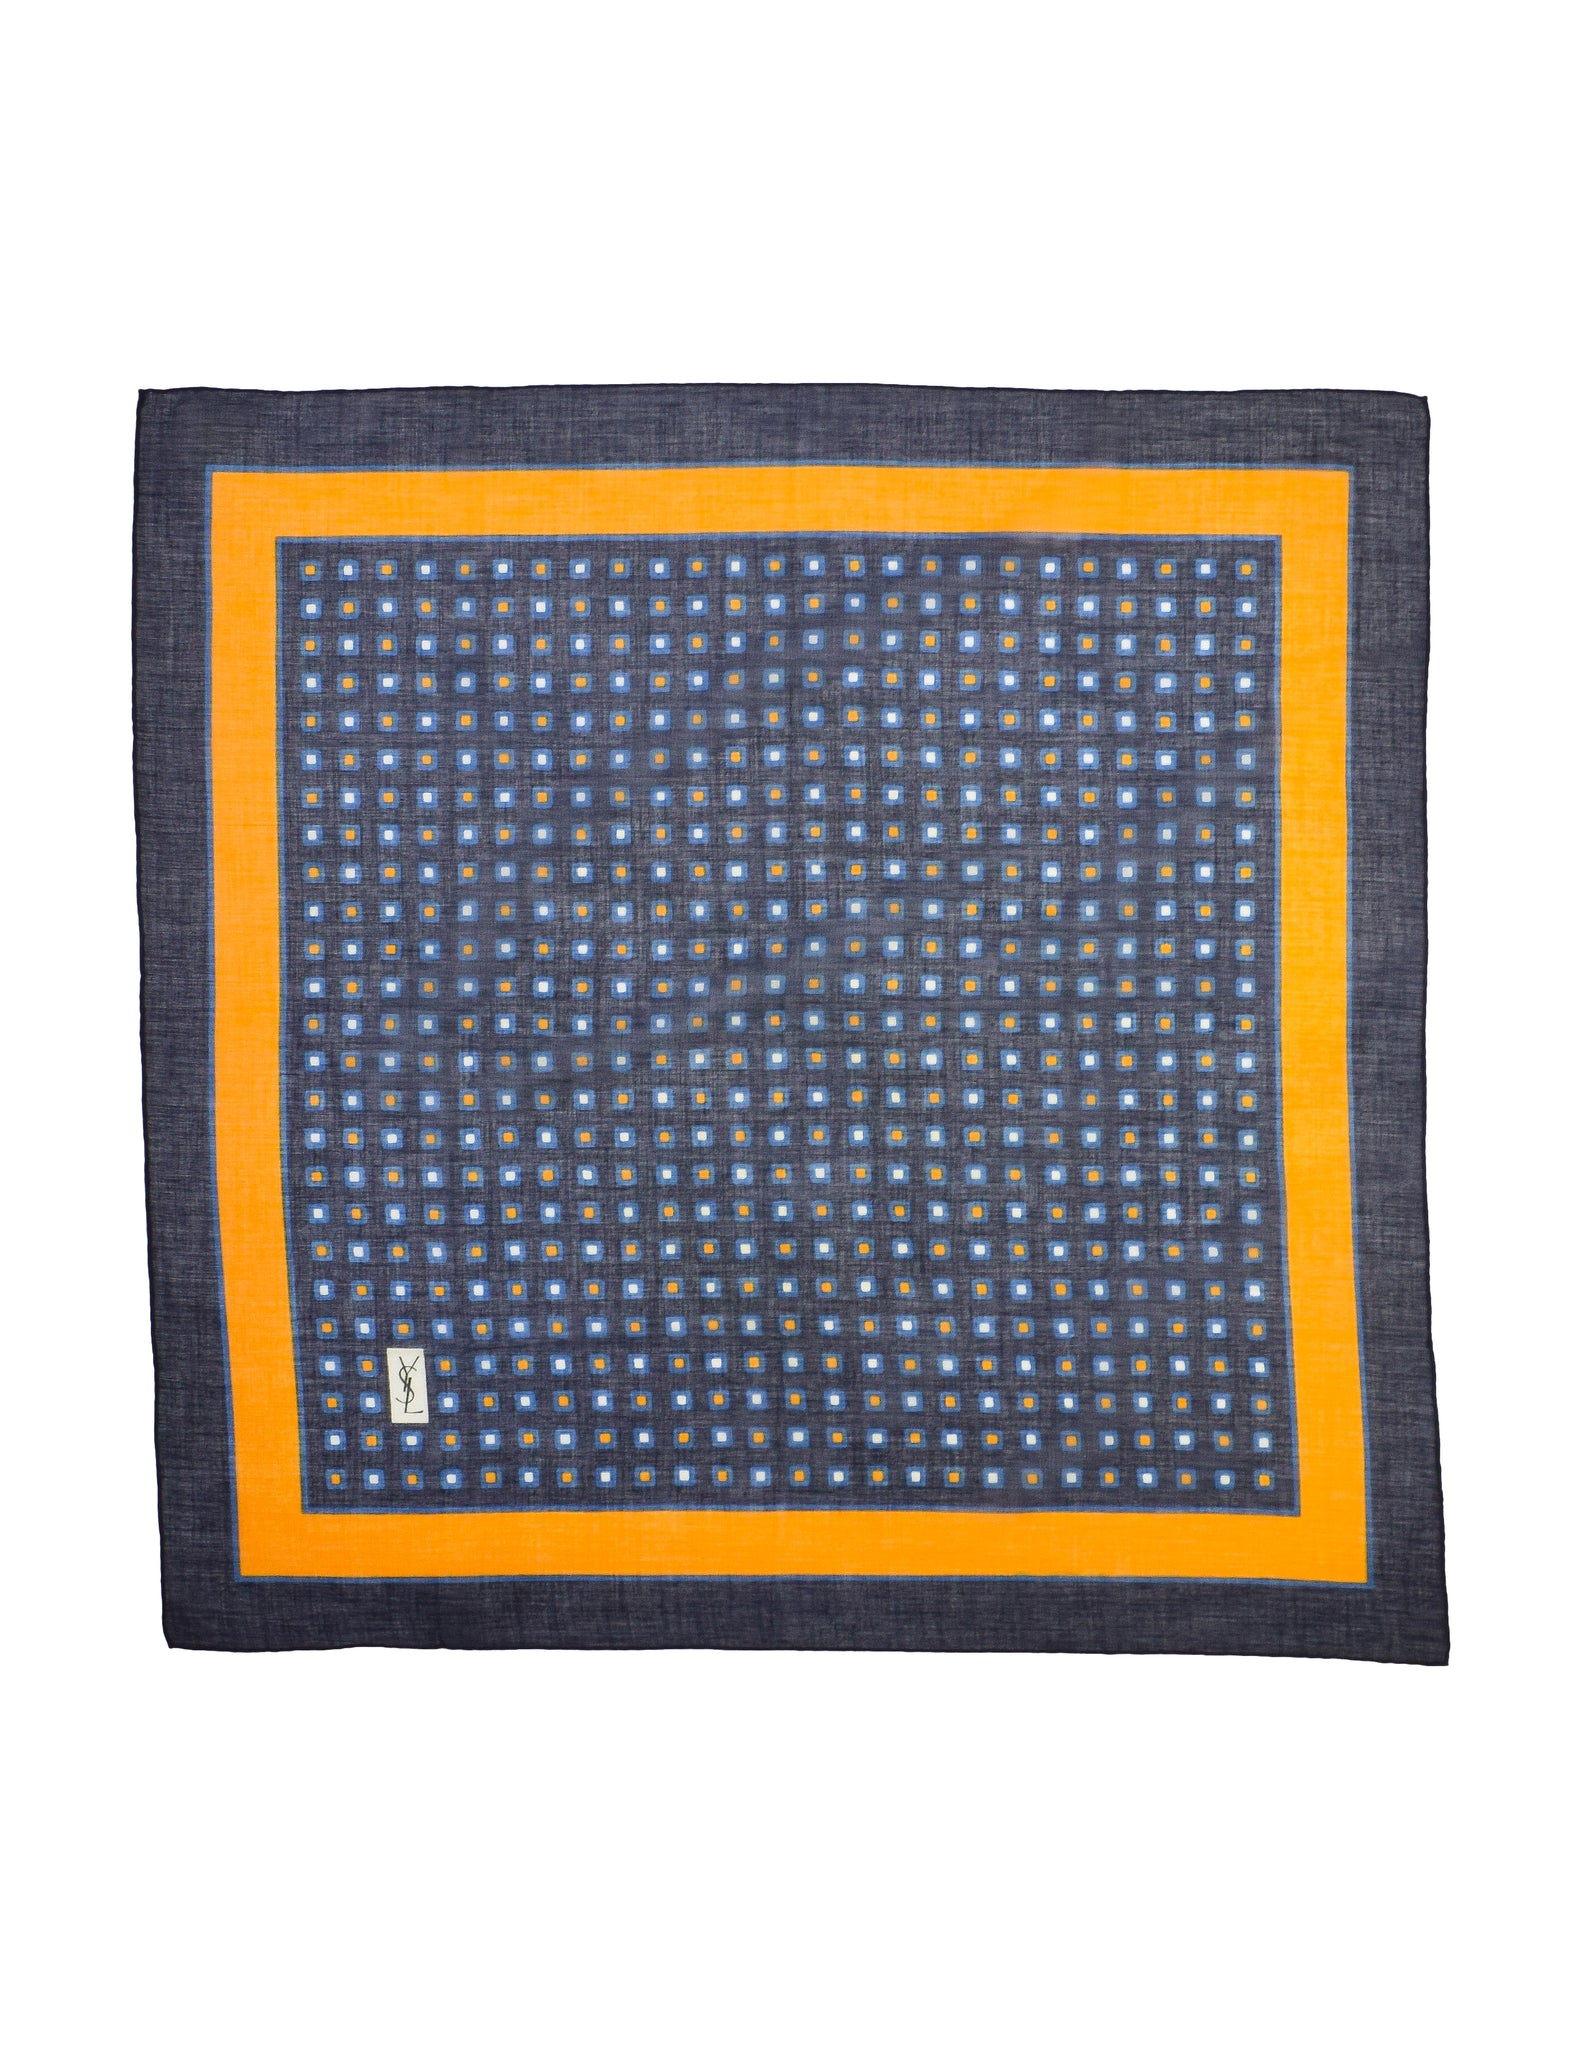 Yves Saint Laurent Vintage Blue Yellow White Graphic Square Print Cotton Scarf